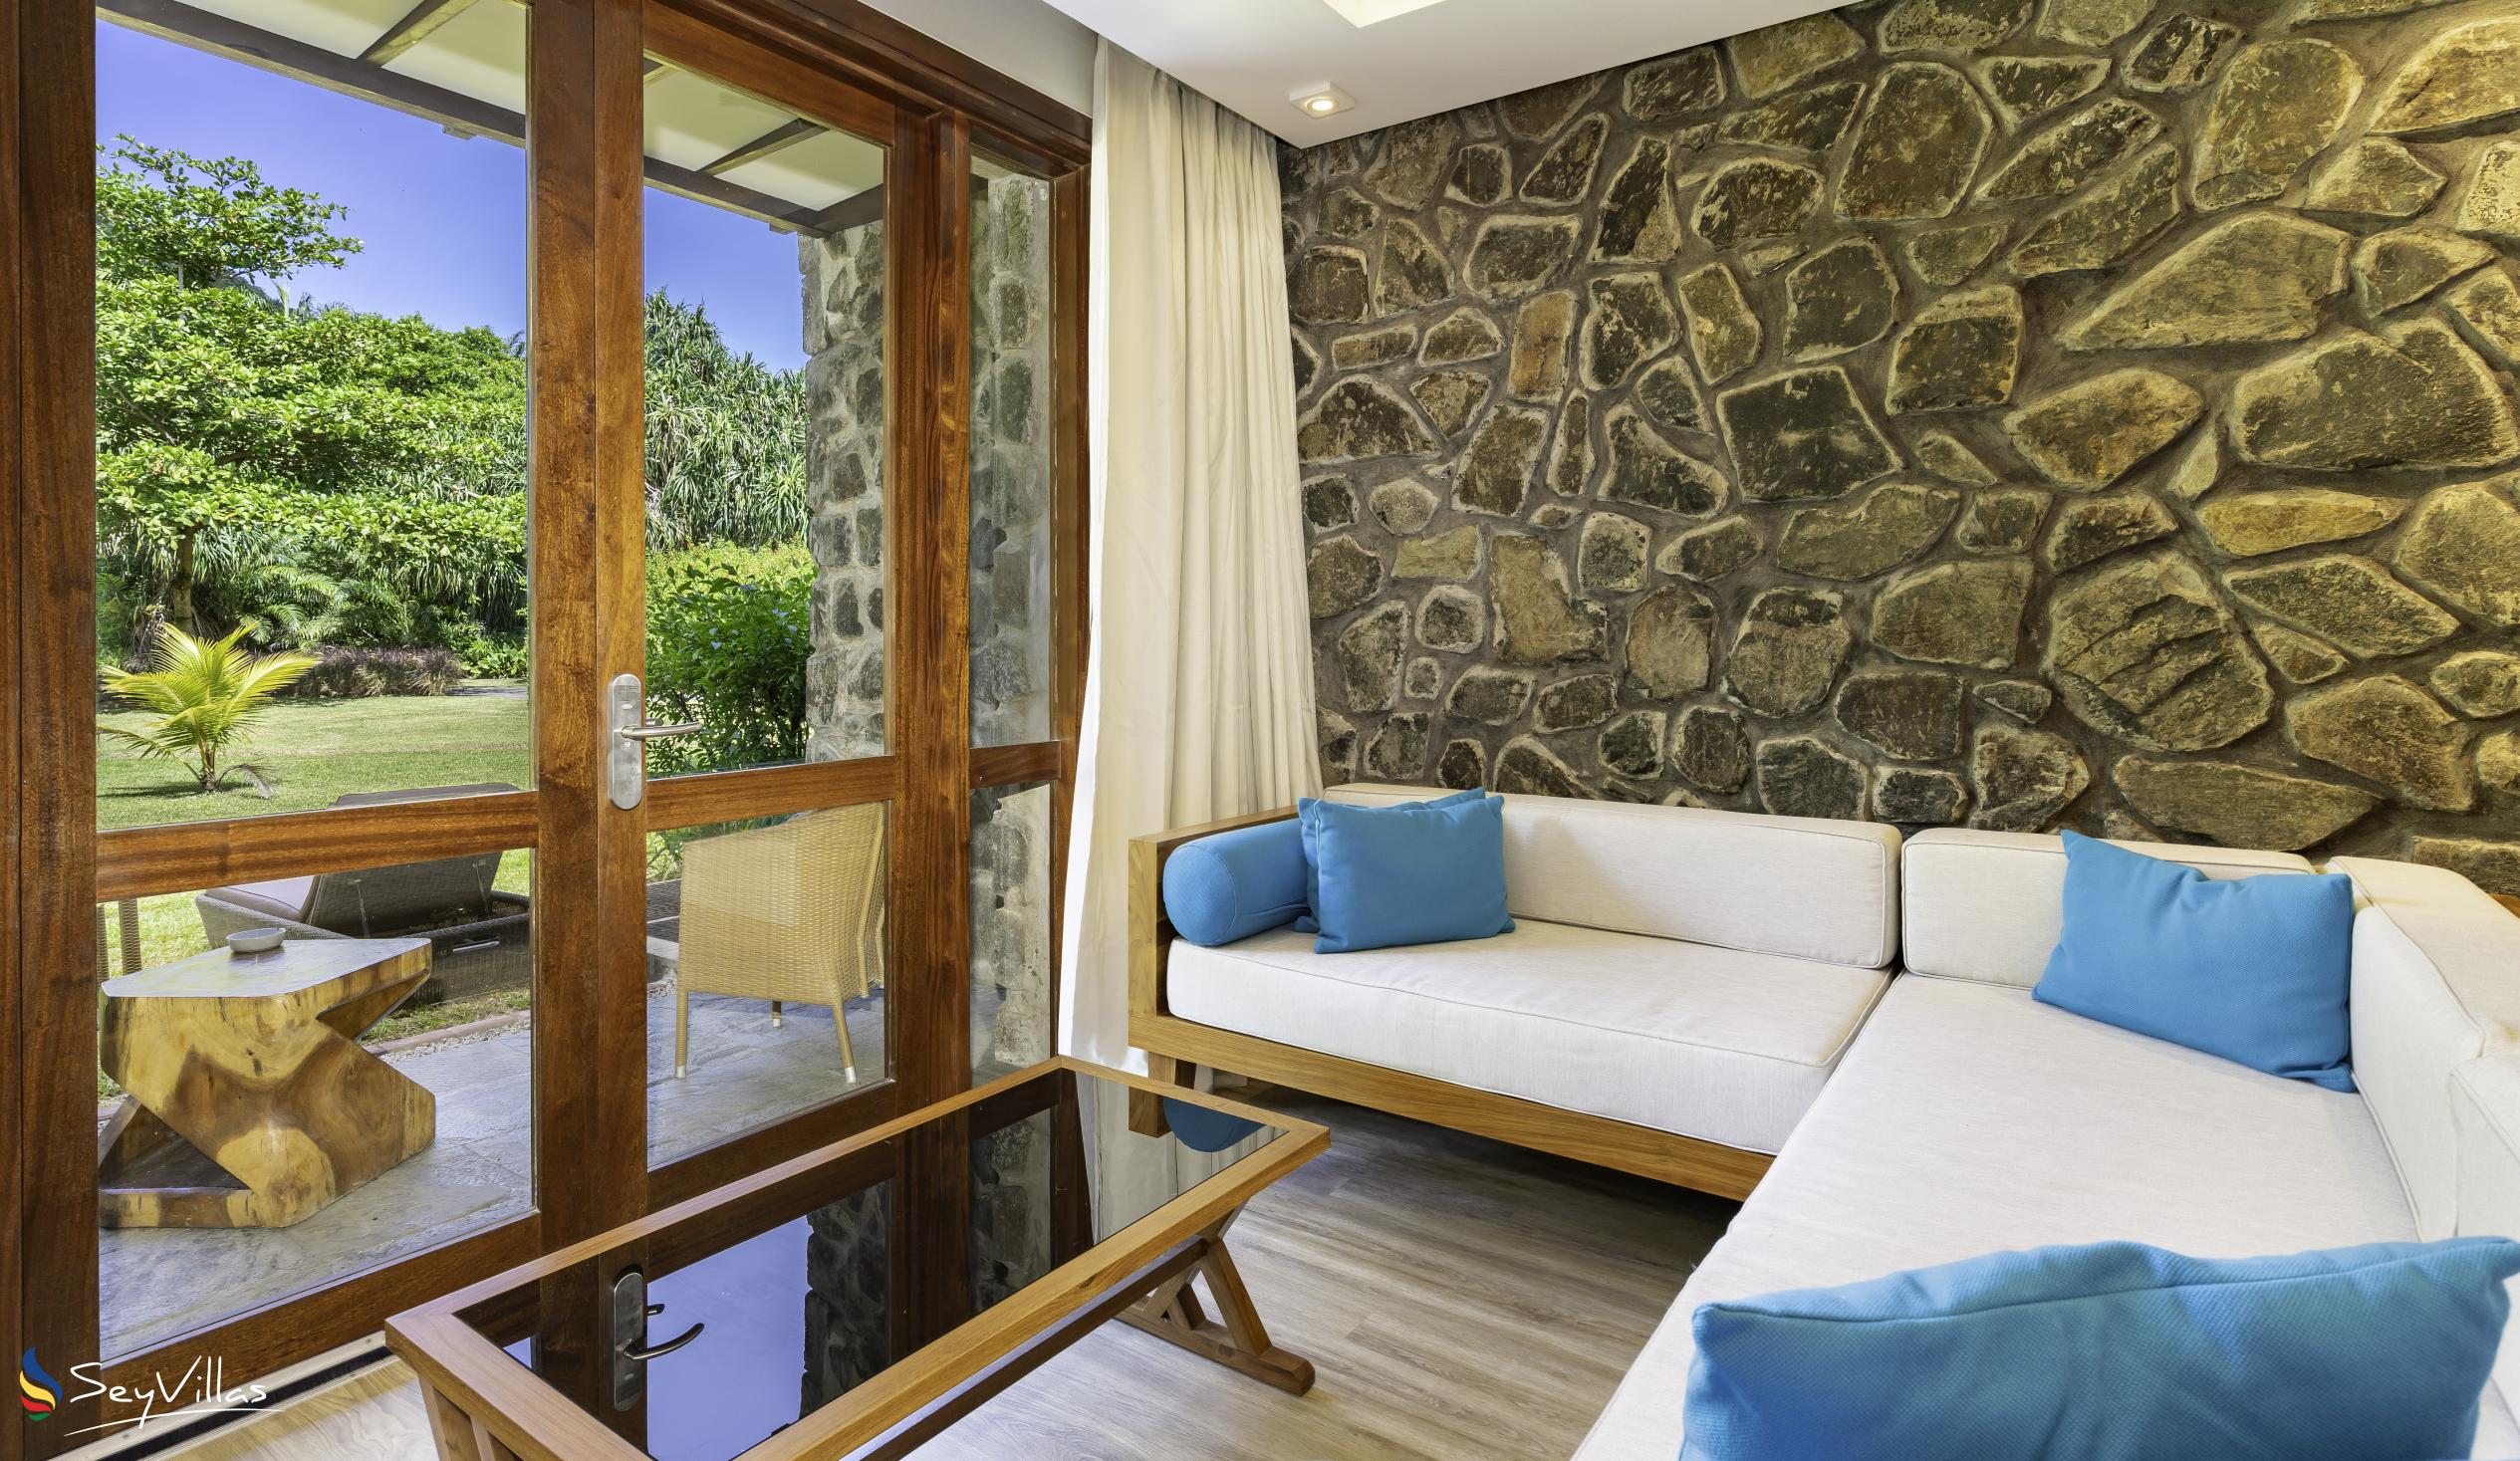 Photo 154: Kempinski Seychelles Resort Baie Lazare - Superior Hill View Room - Mahé (Seychelles)